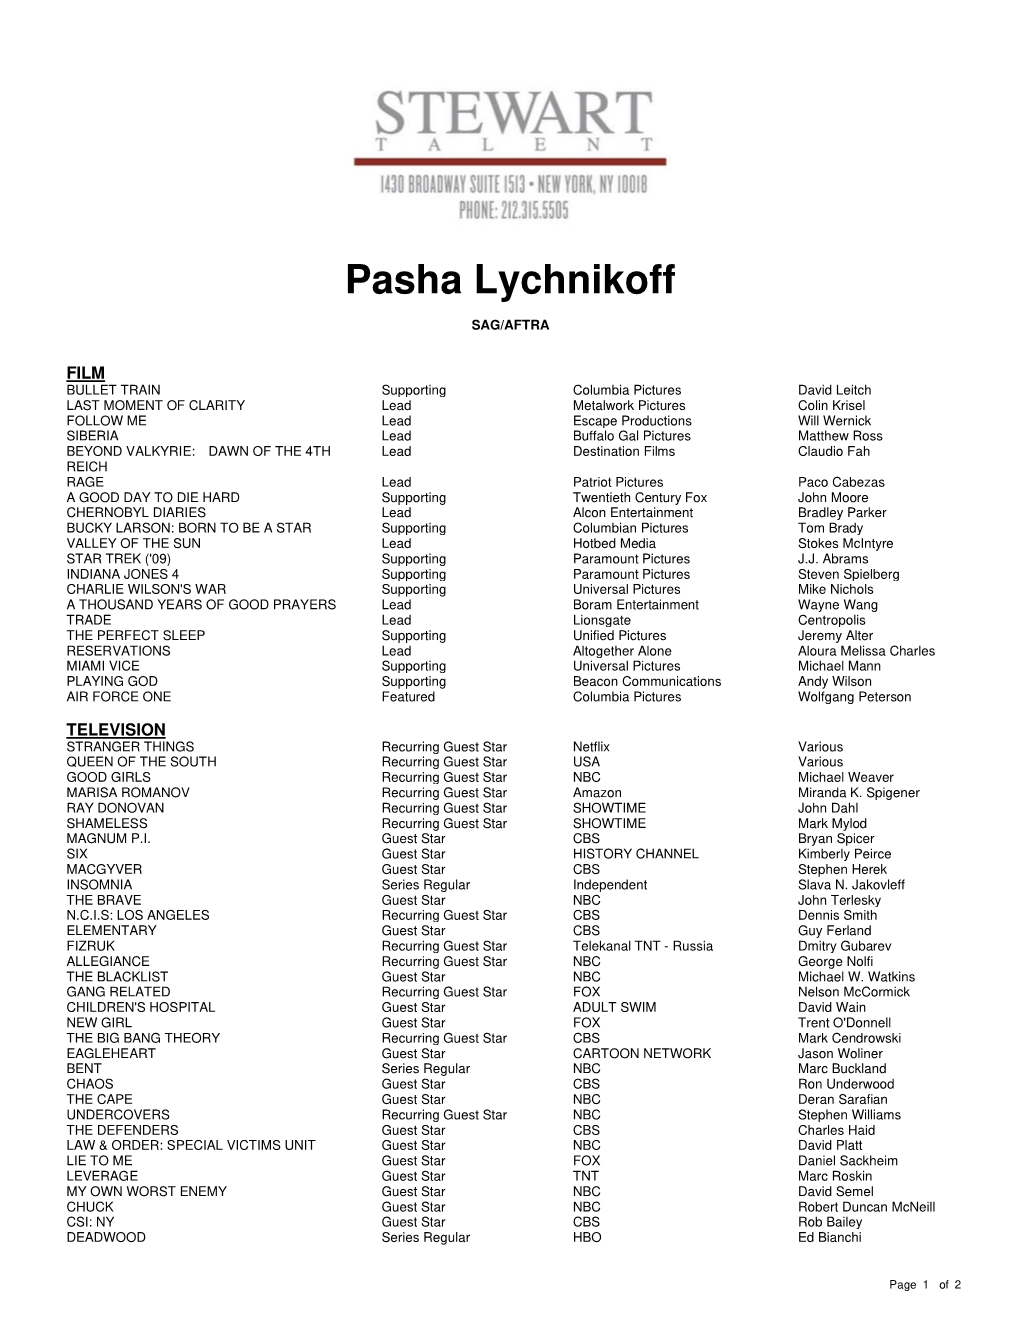 Pasha Lychnikoff